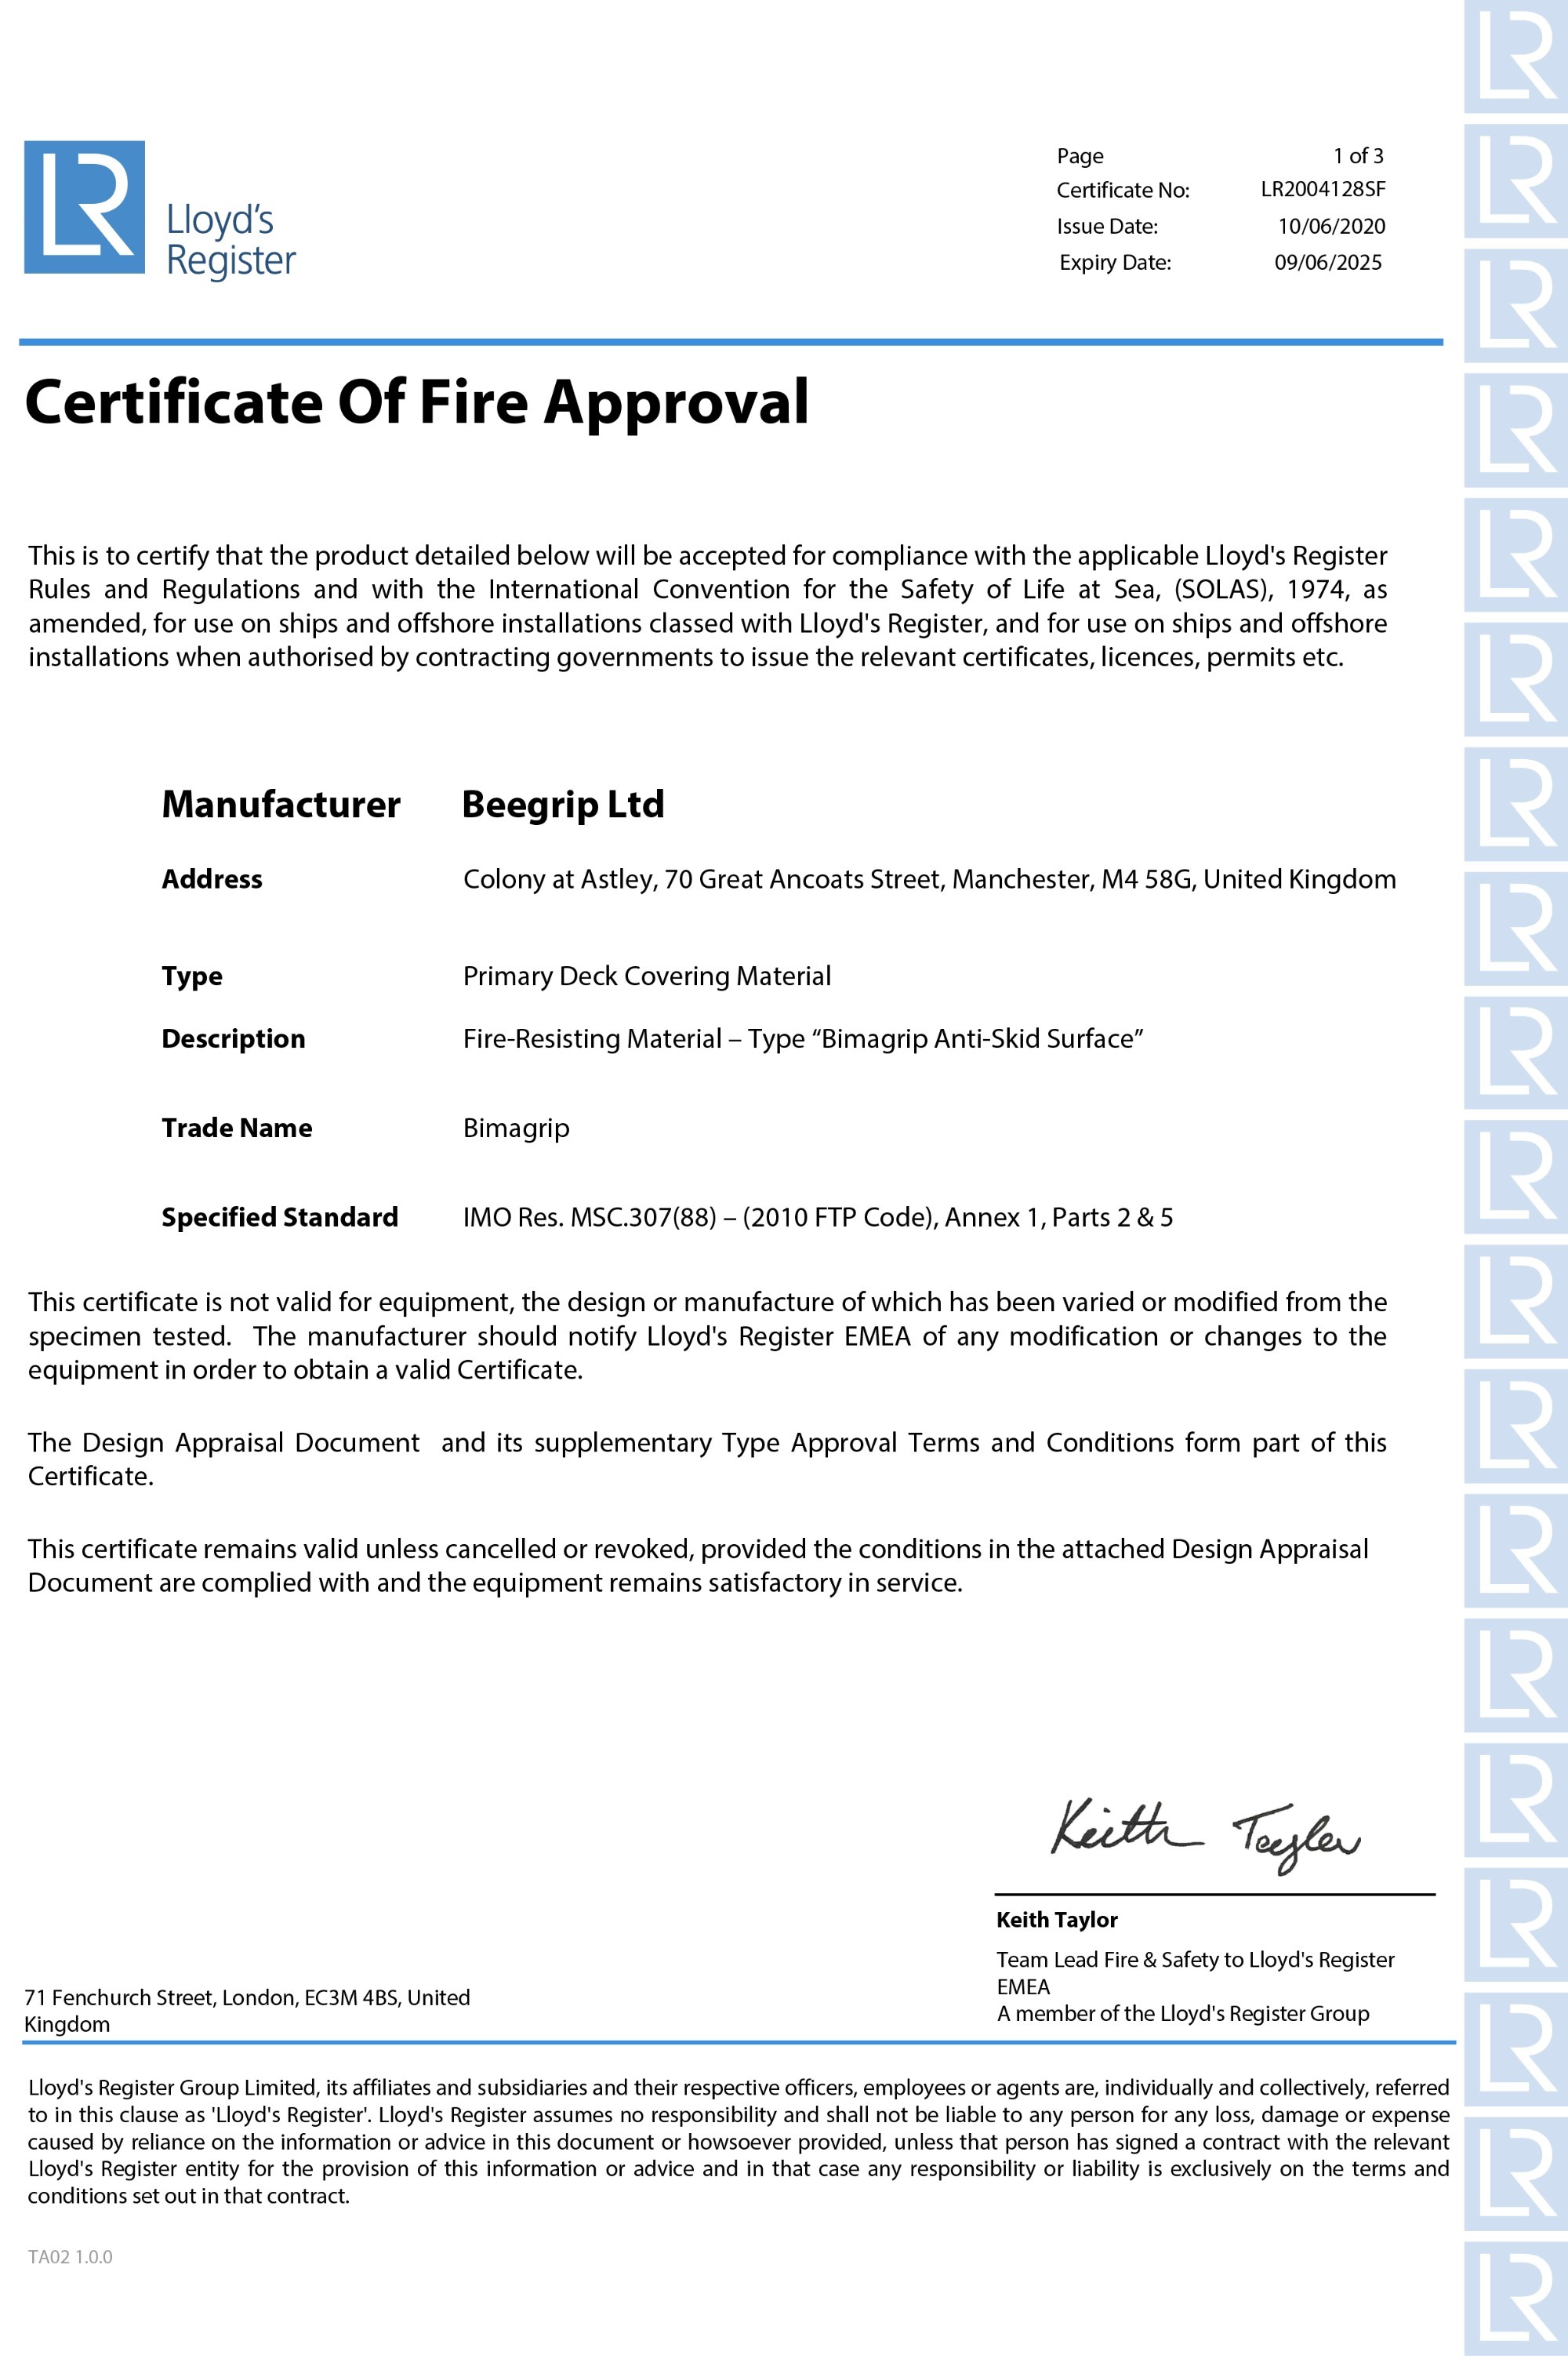 Lloyd's Certificate_2021.2.18